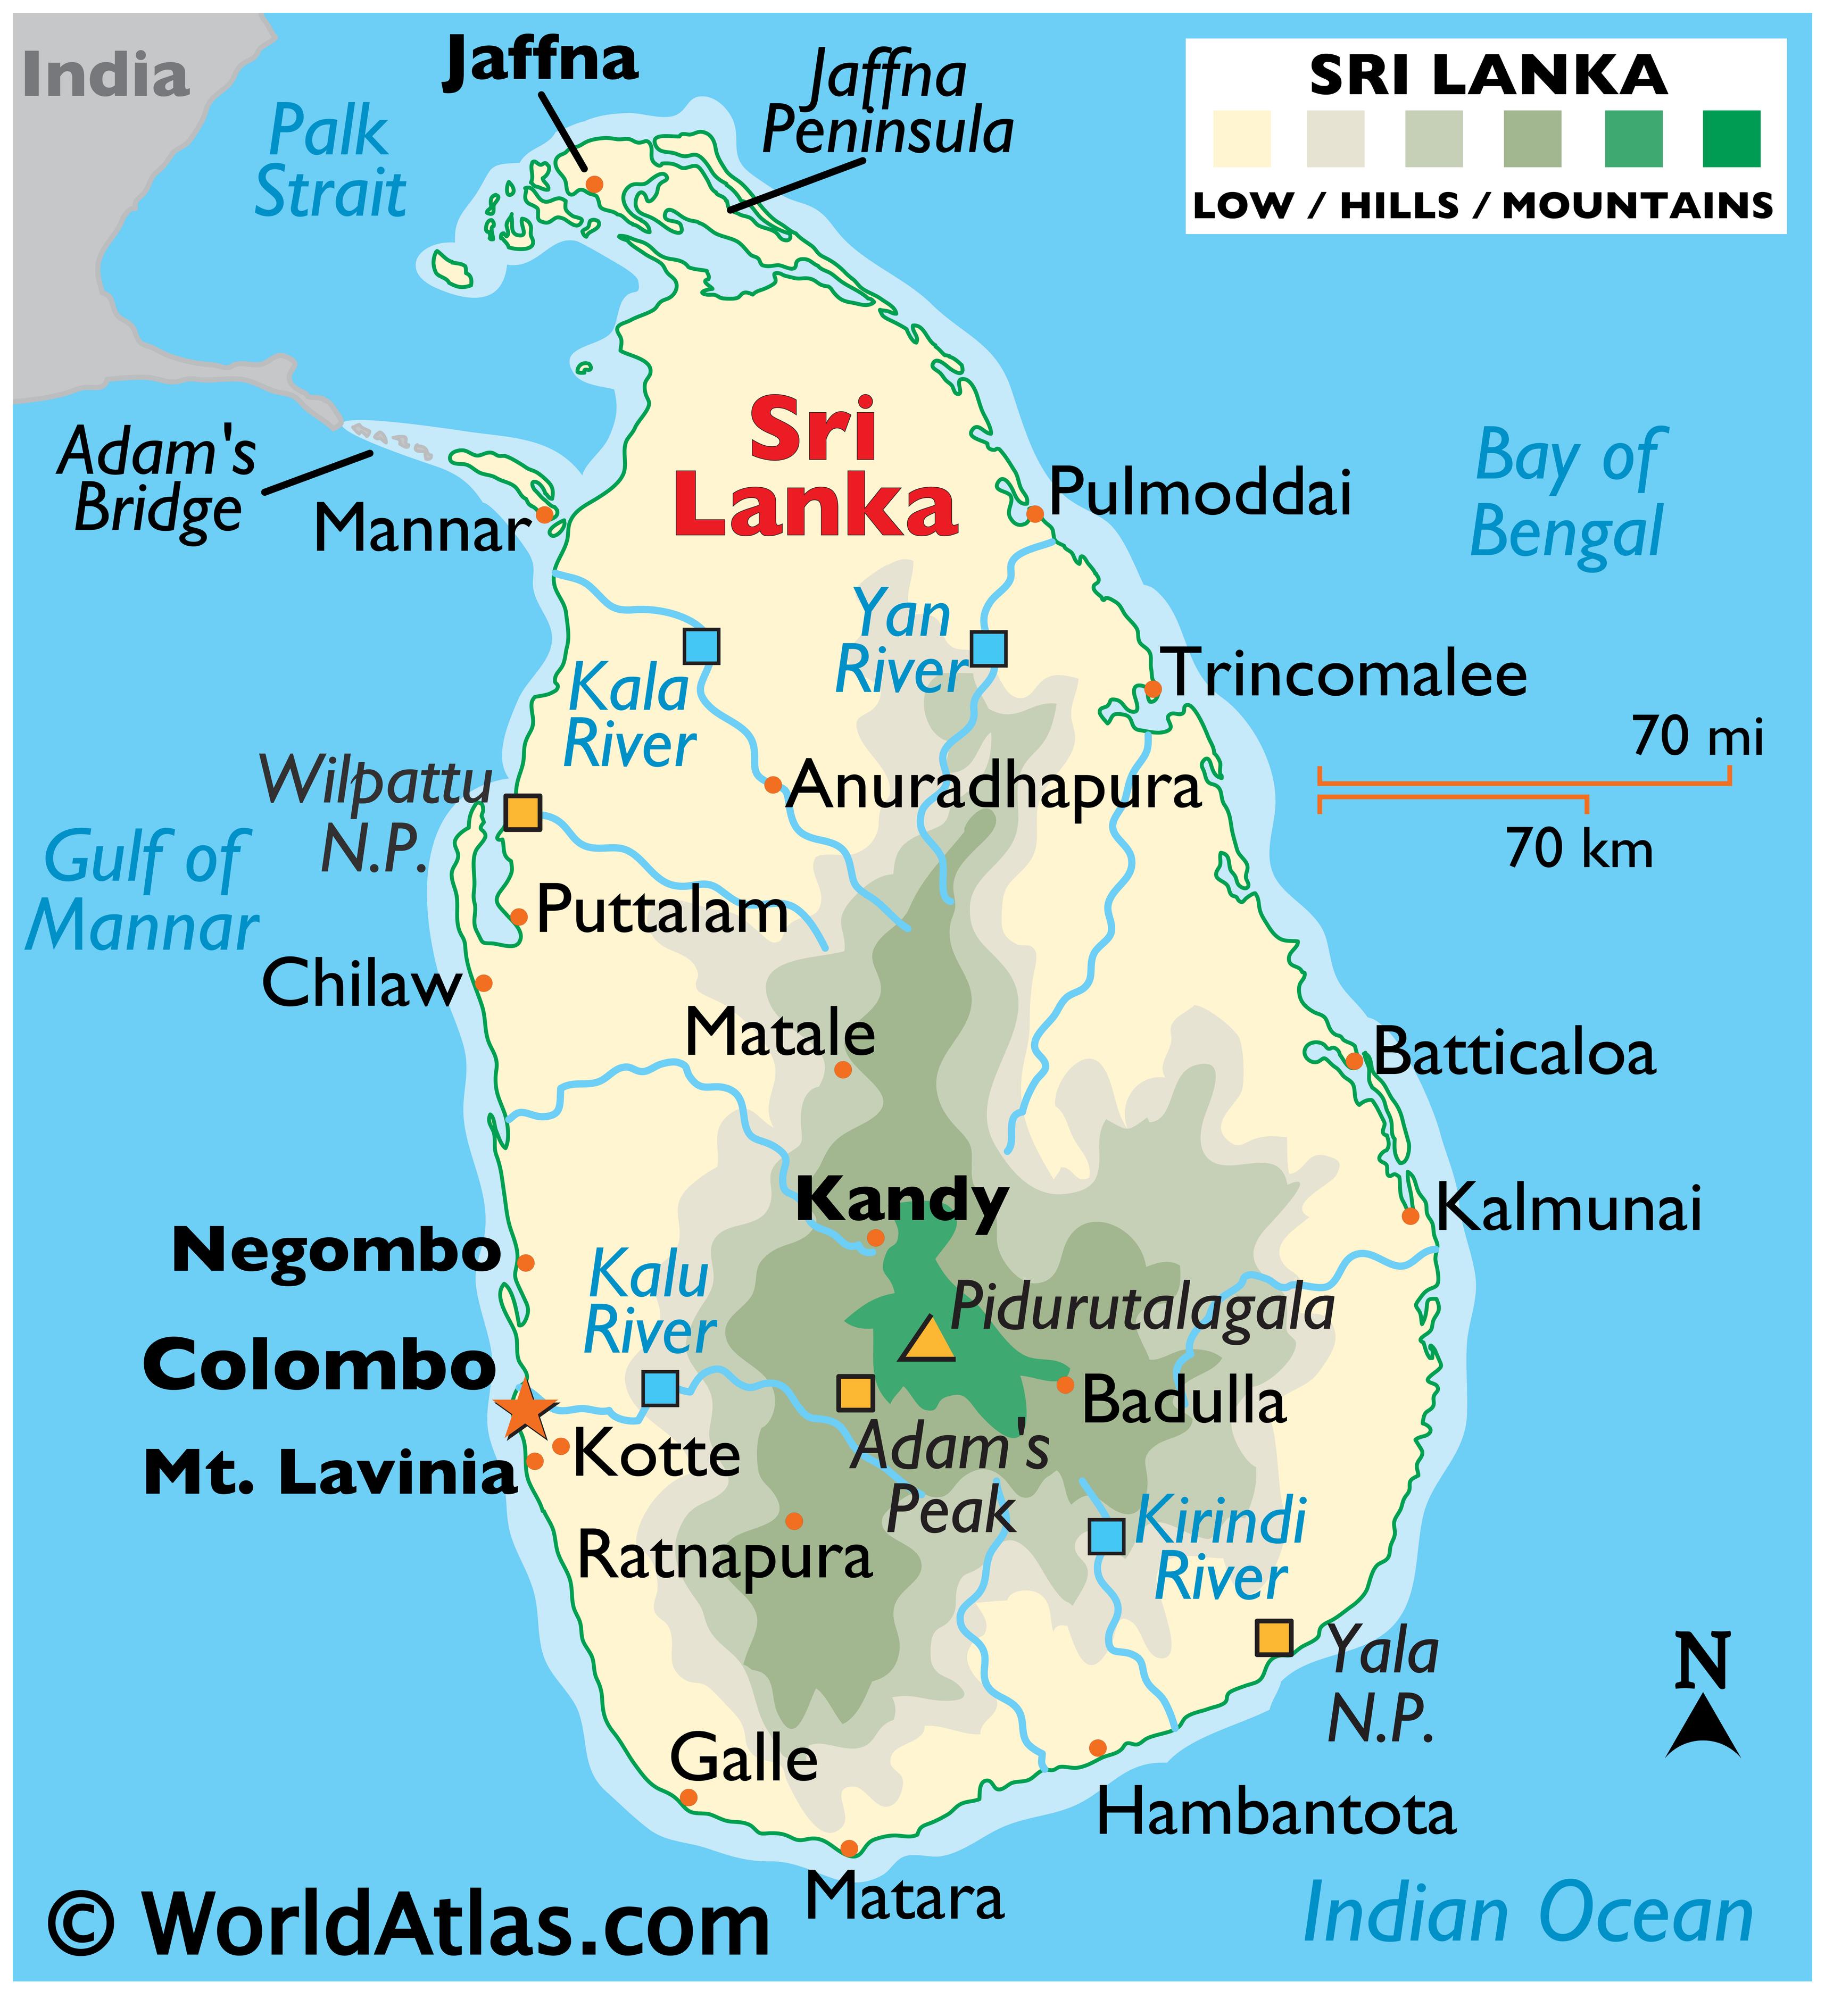 Sri Lanka: The most important words